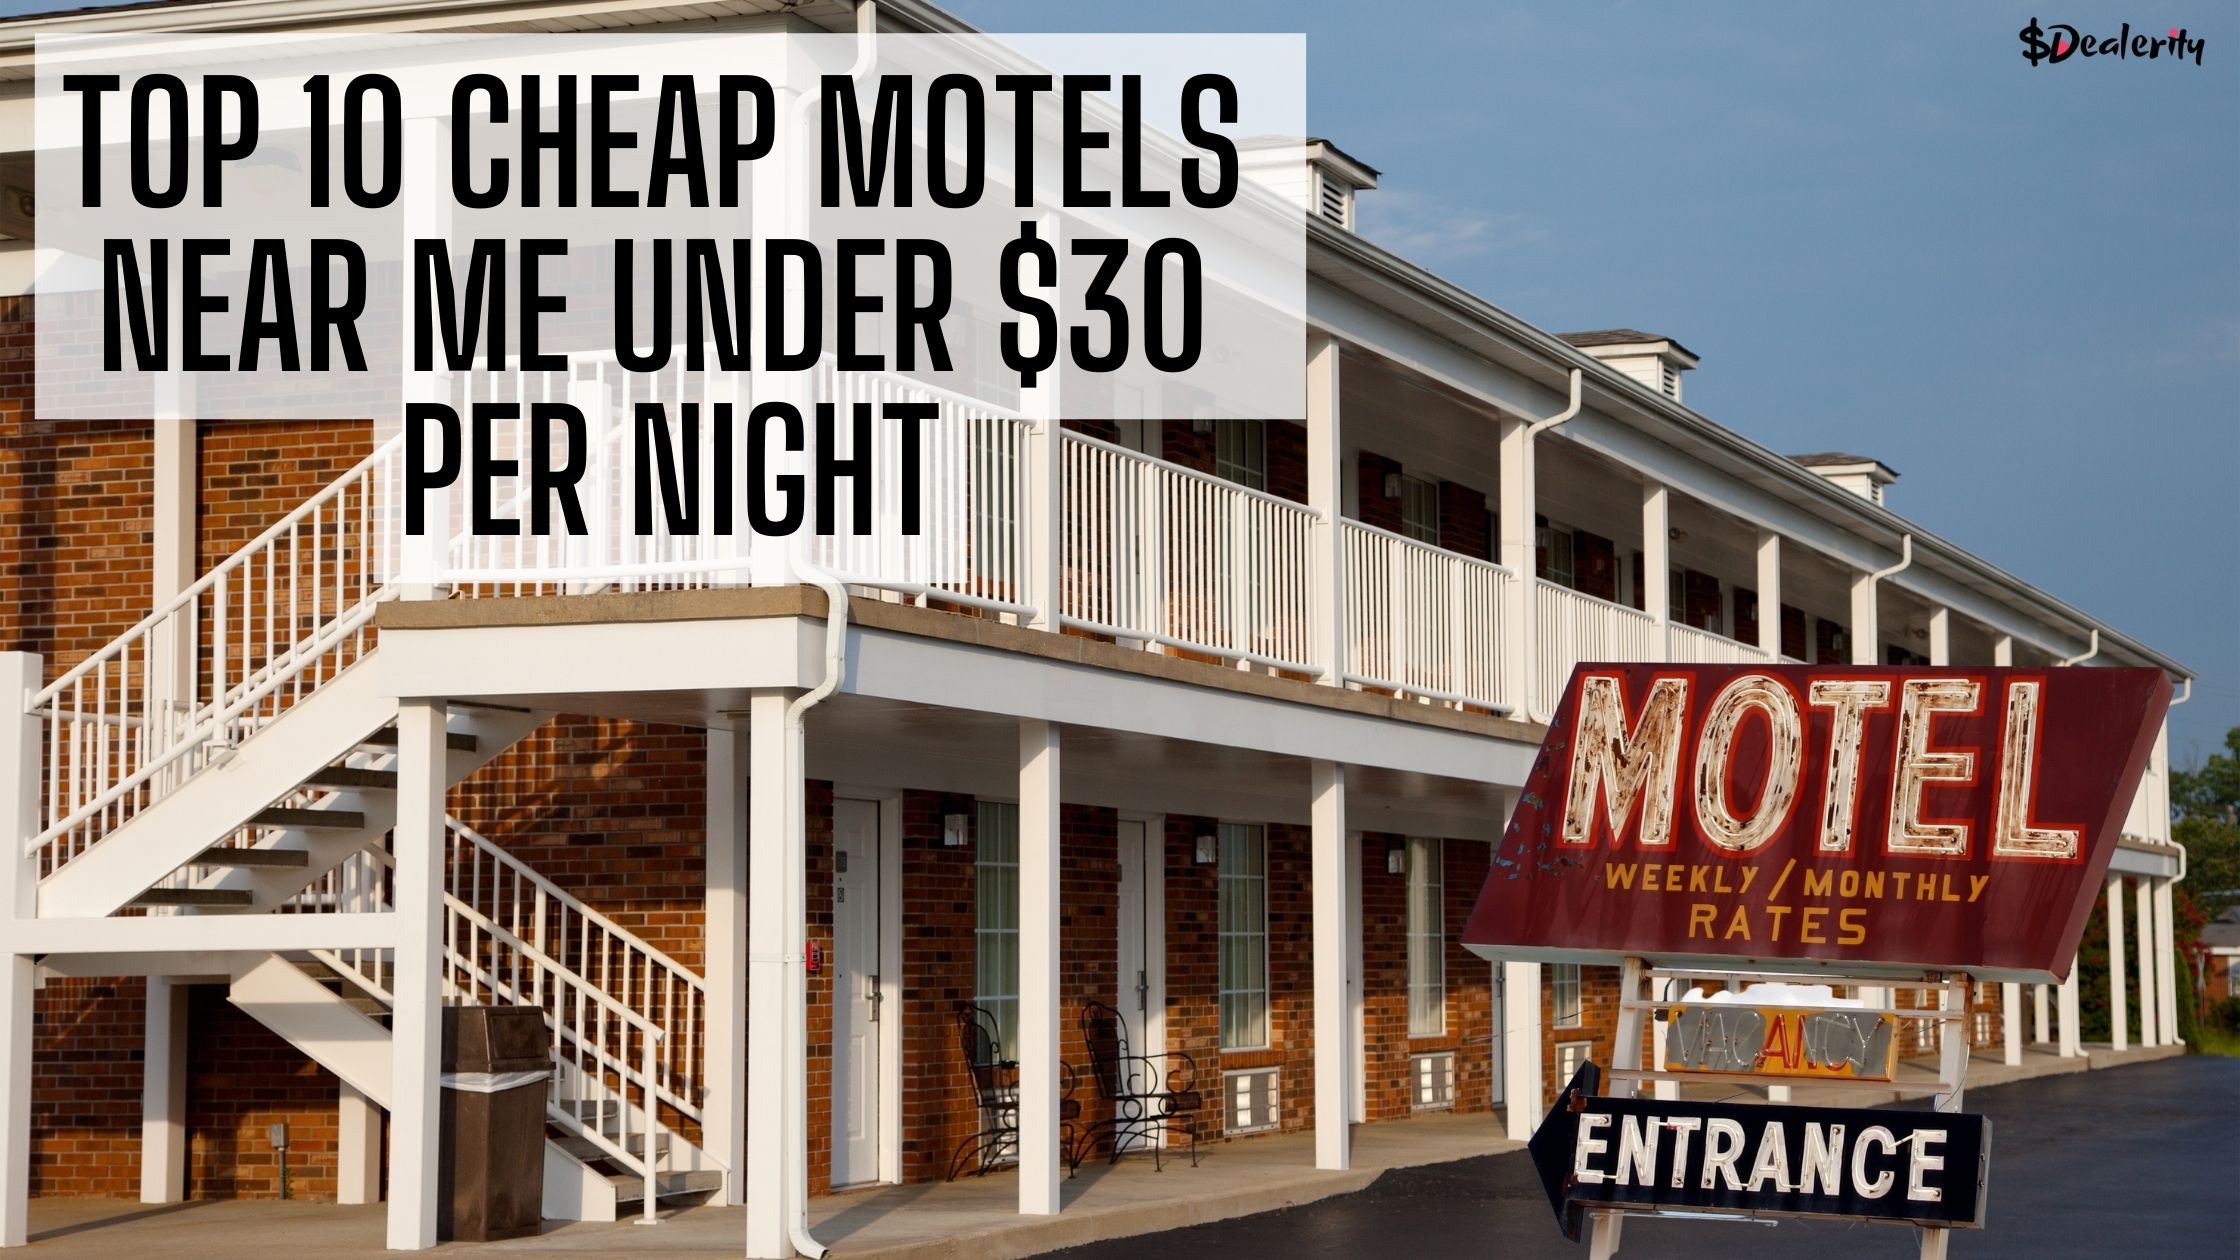 Top 10 Cheap Motels Near Me Under $30 Per Night